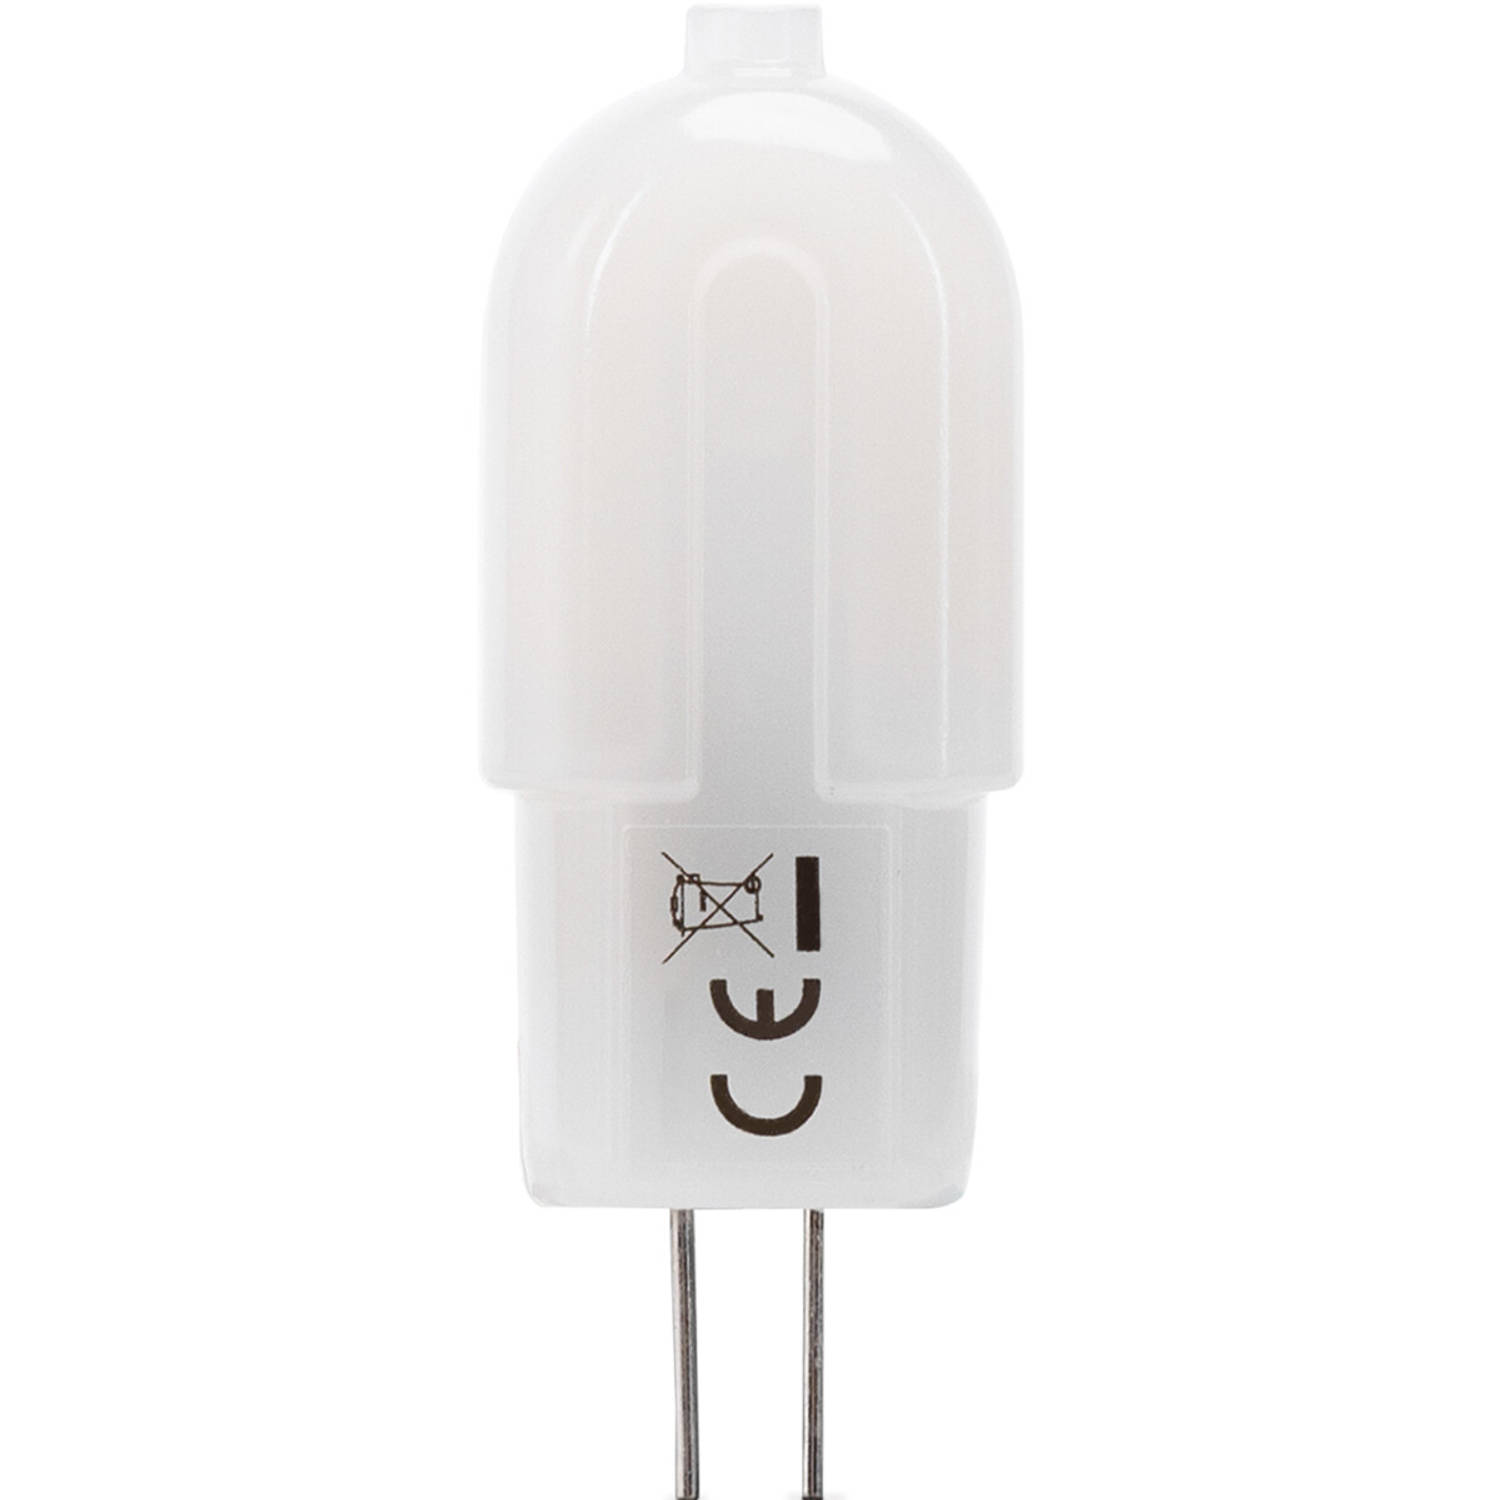 LED Lamp - Velvalux - G4 Fitting - Dimbaar - 2W - Warm Wit 3000K - Melkwit - 12V Steeklamp Vervangt 20W